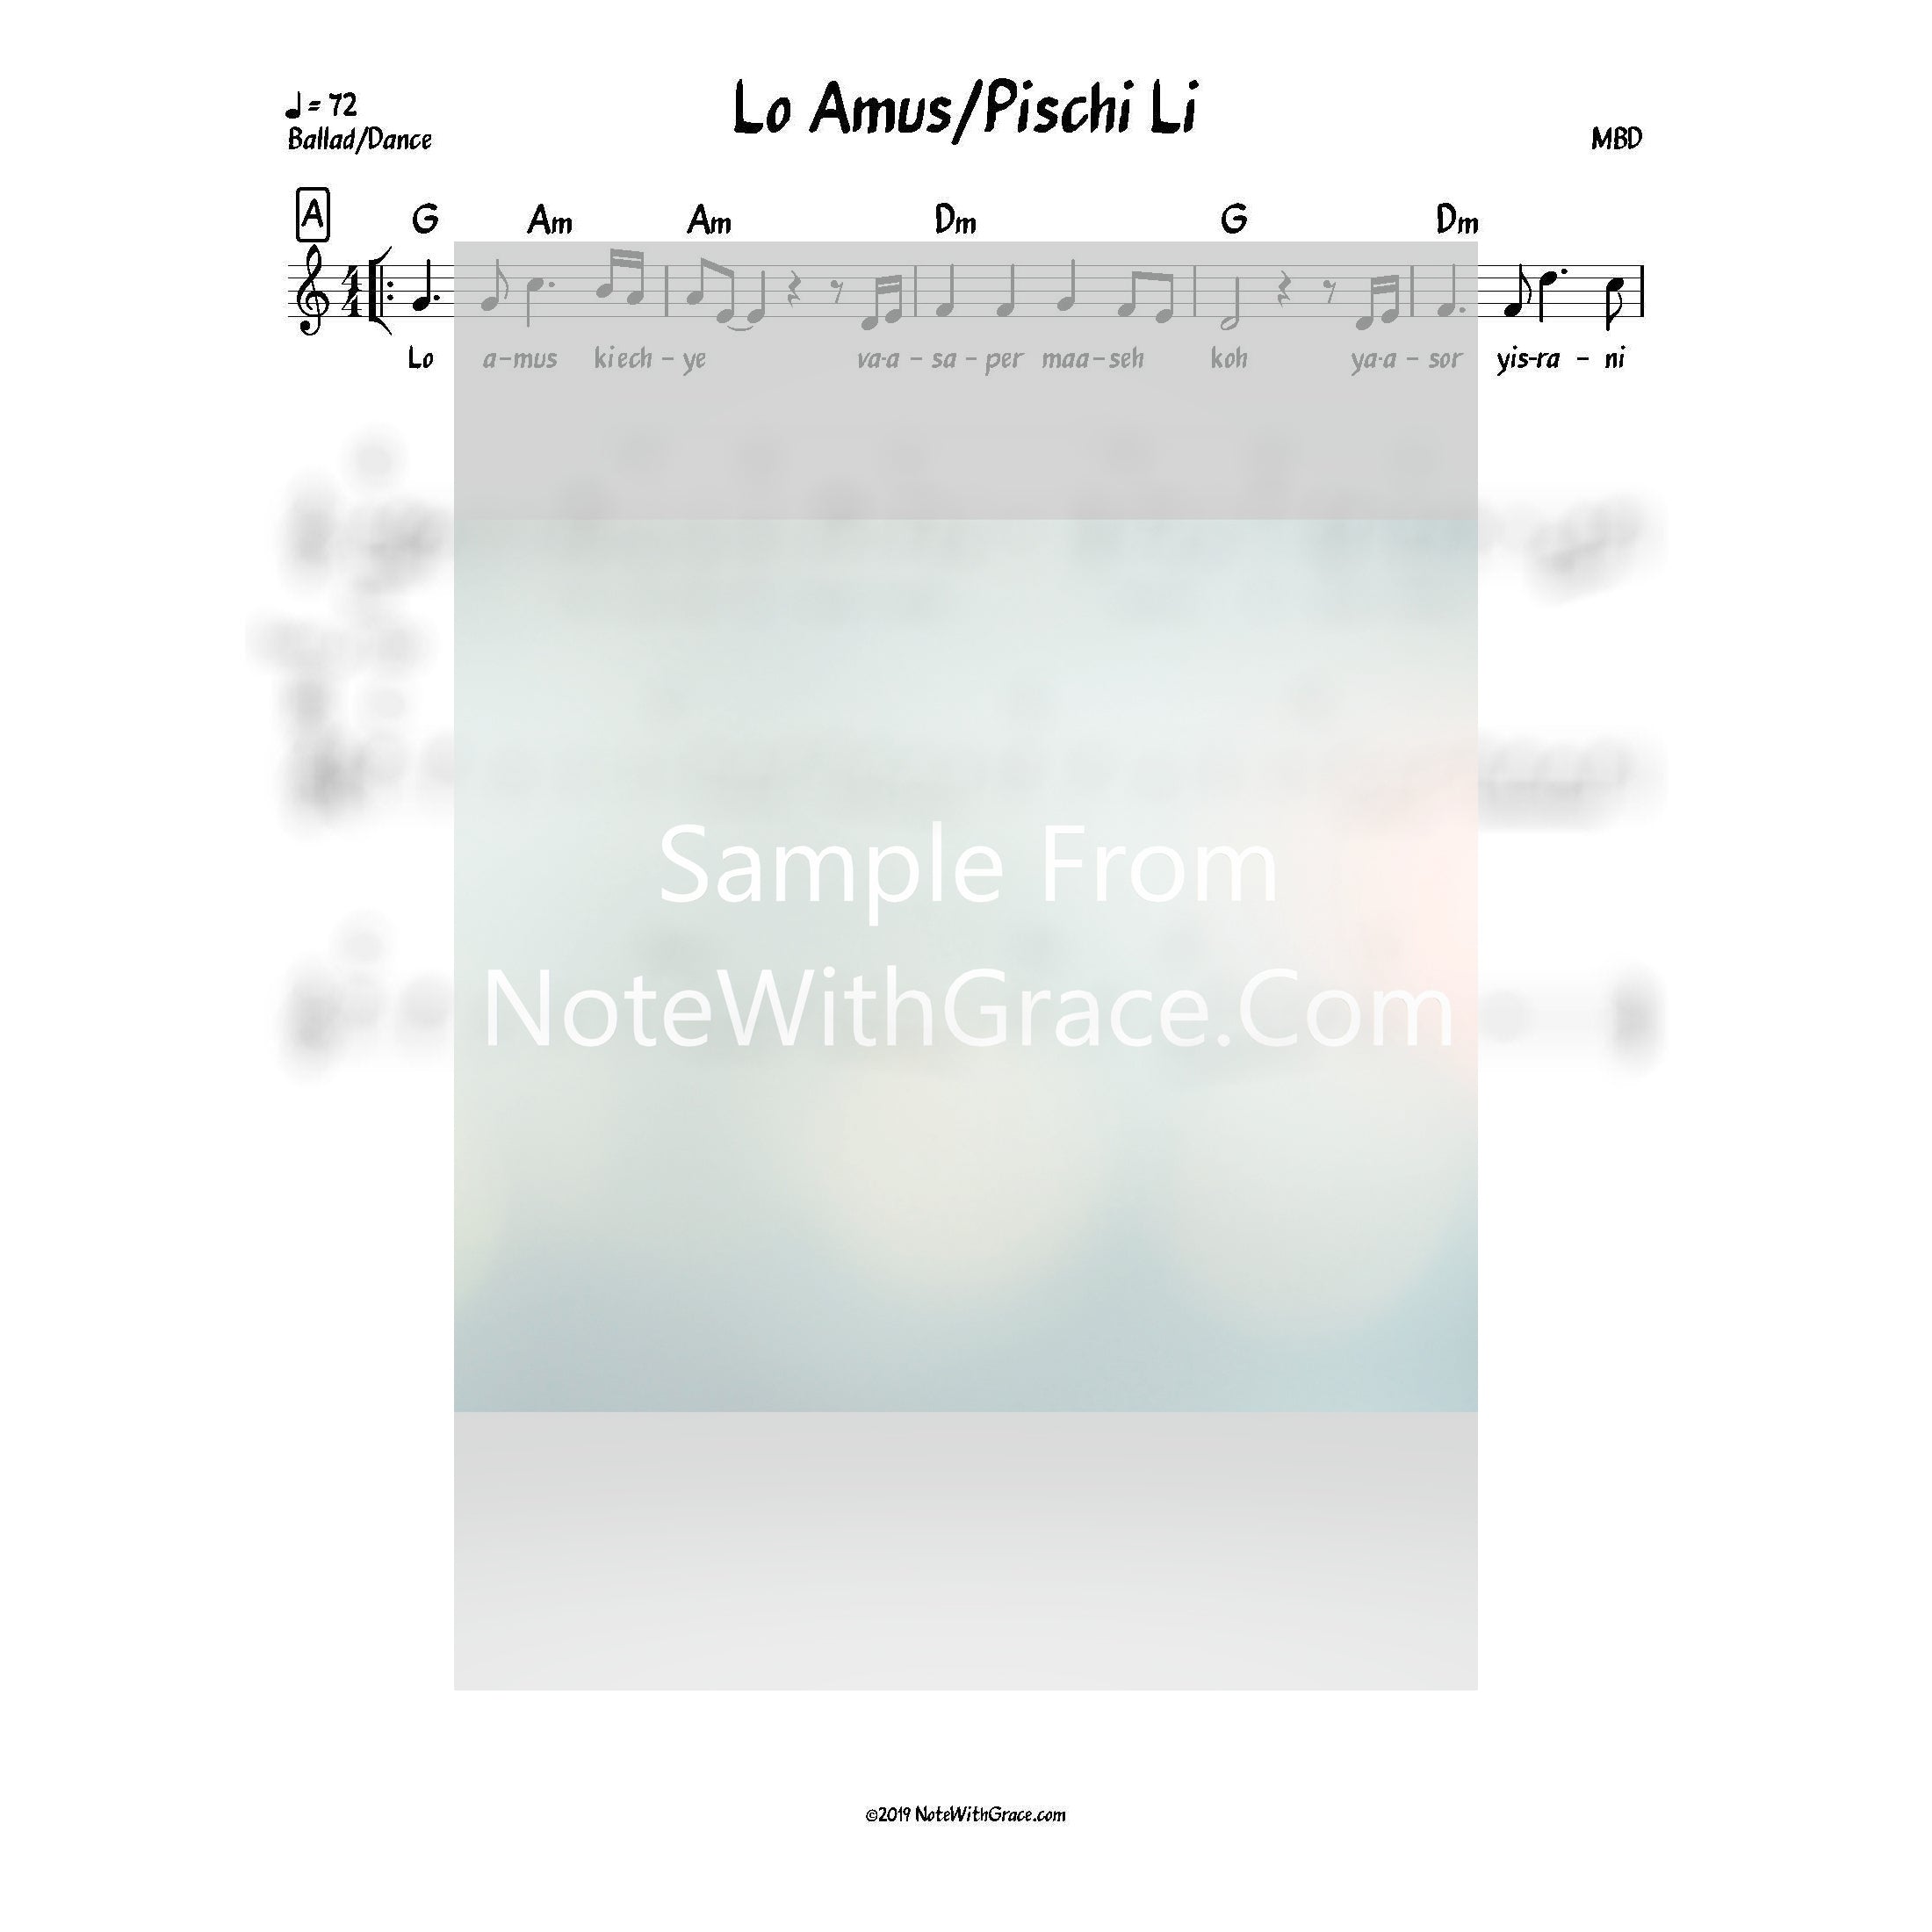 Lo Amus - Pischi Li Lead Sheet (MBD)-Sheet music-NoteWithGrace.com